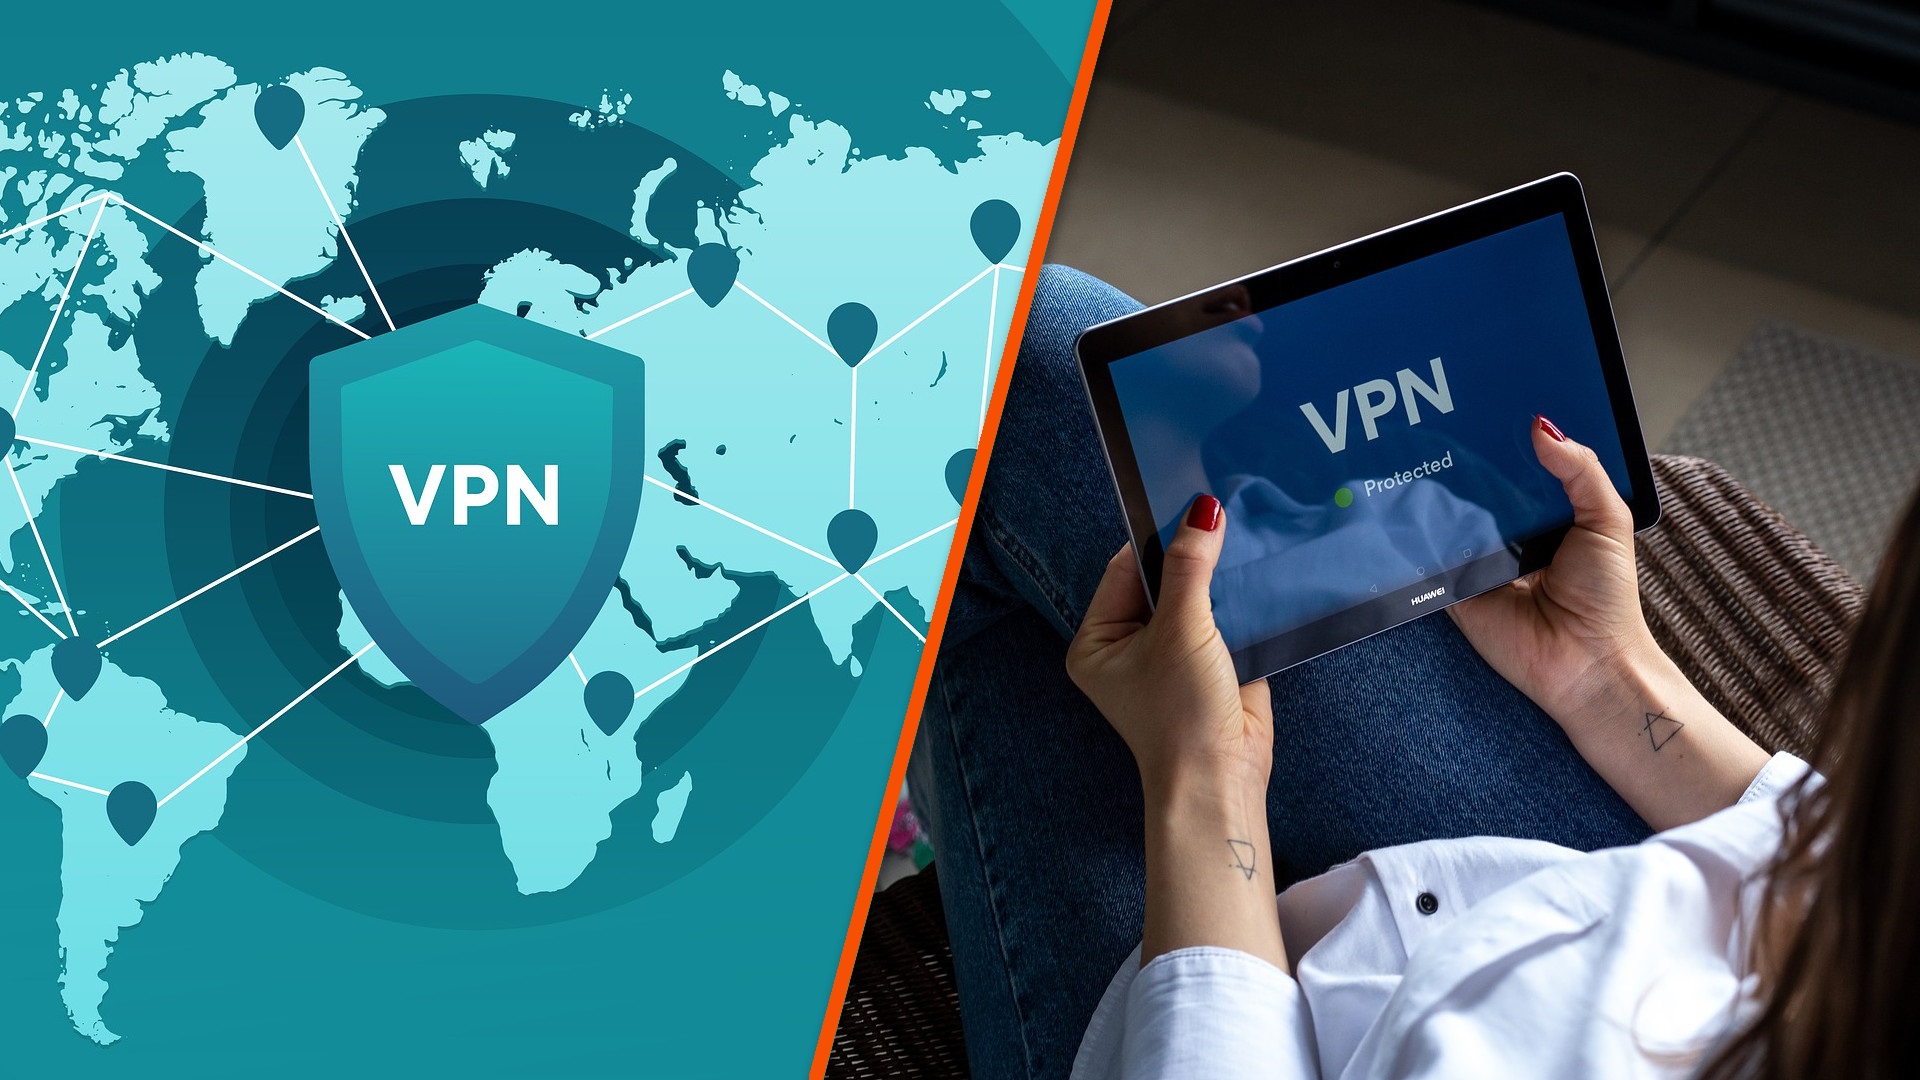 VPN推薦